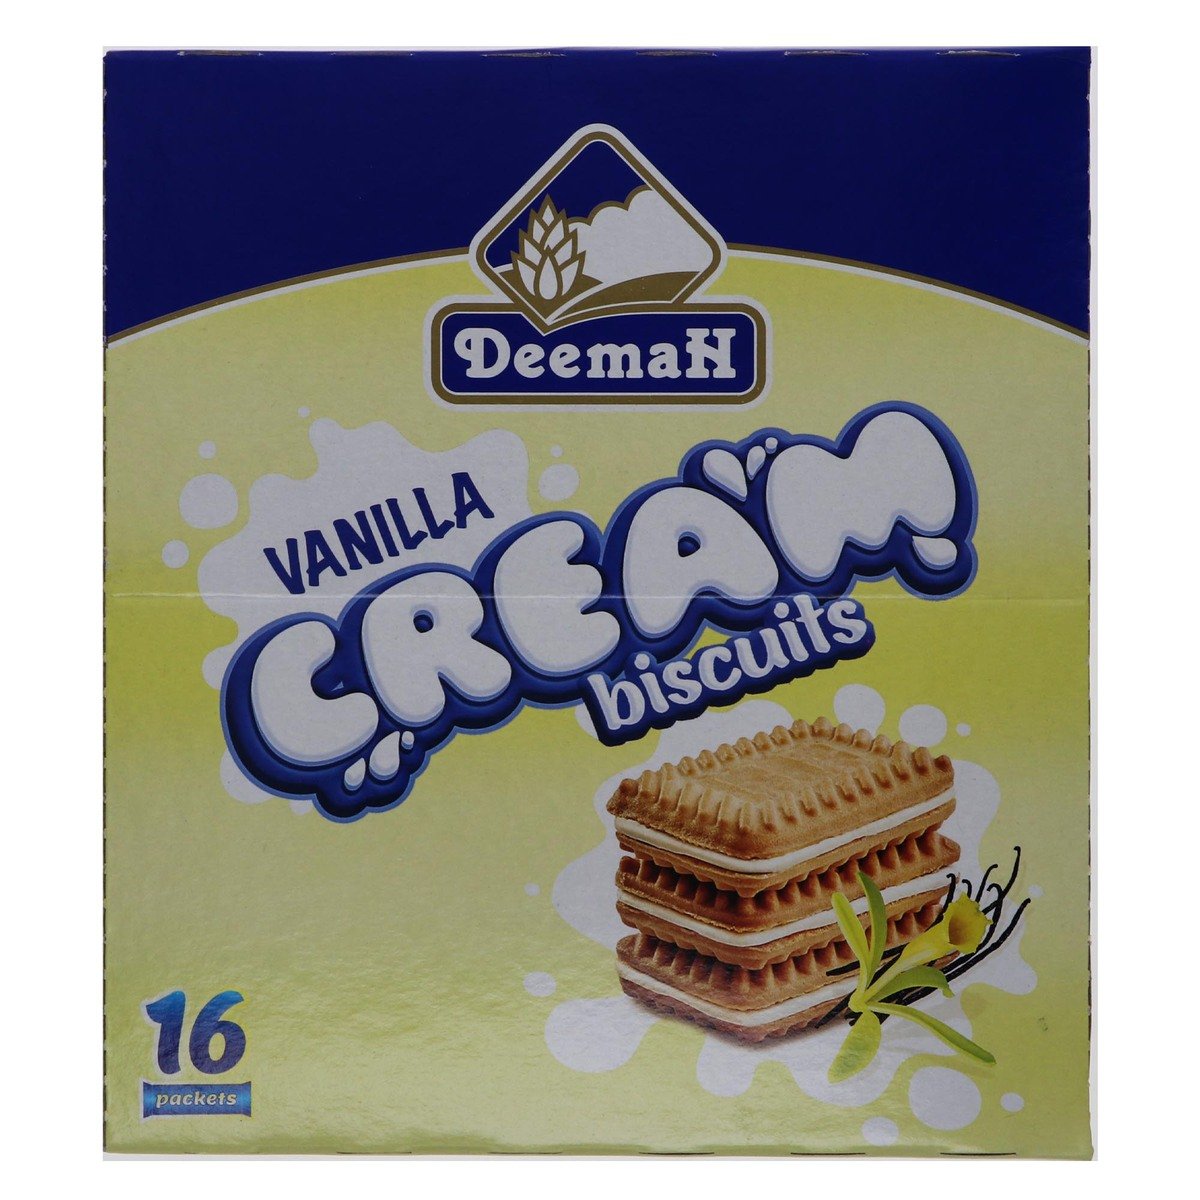 Deemah Vanilla Cream Biscuits 16 x 27g